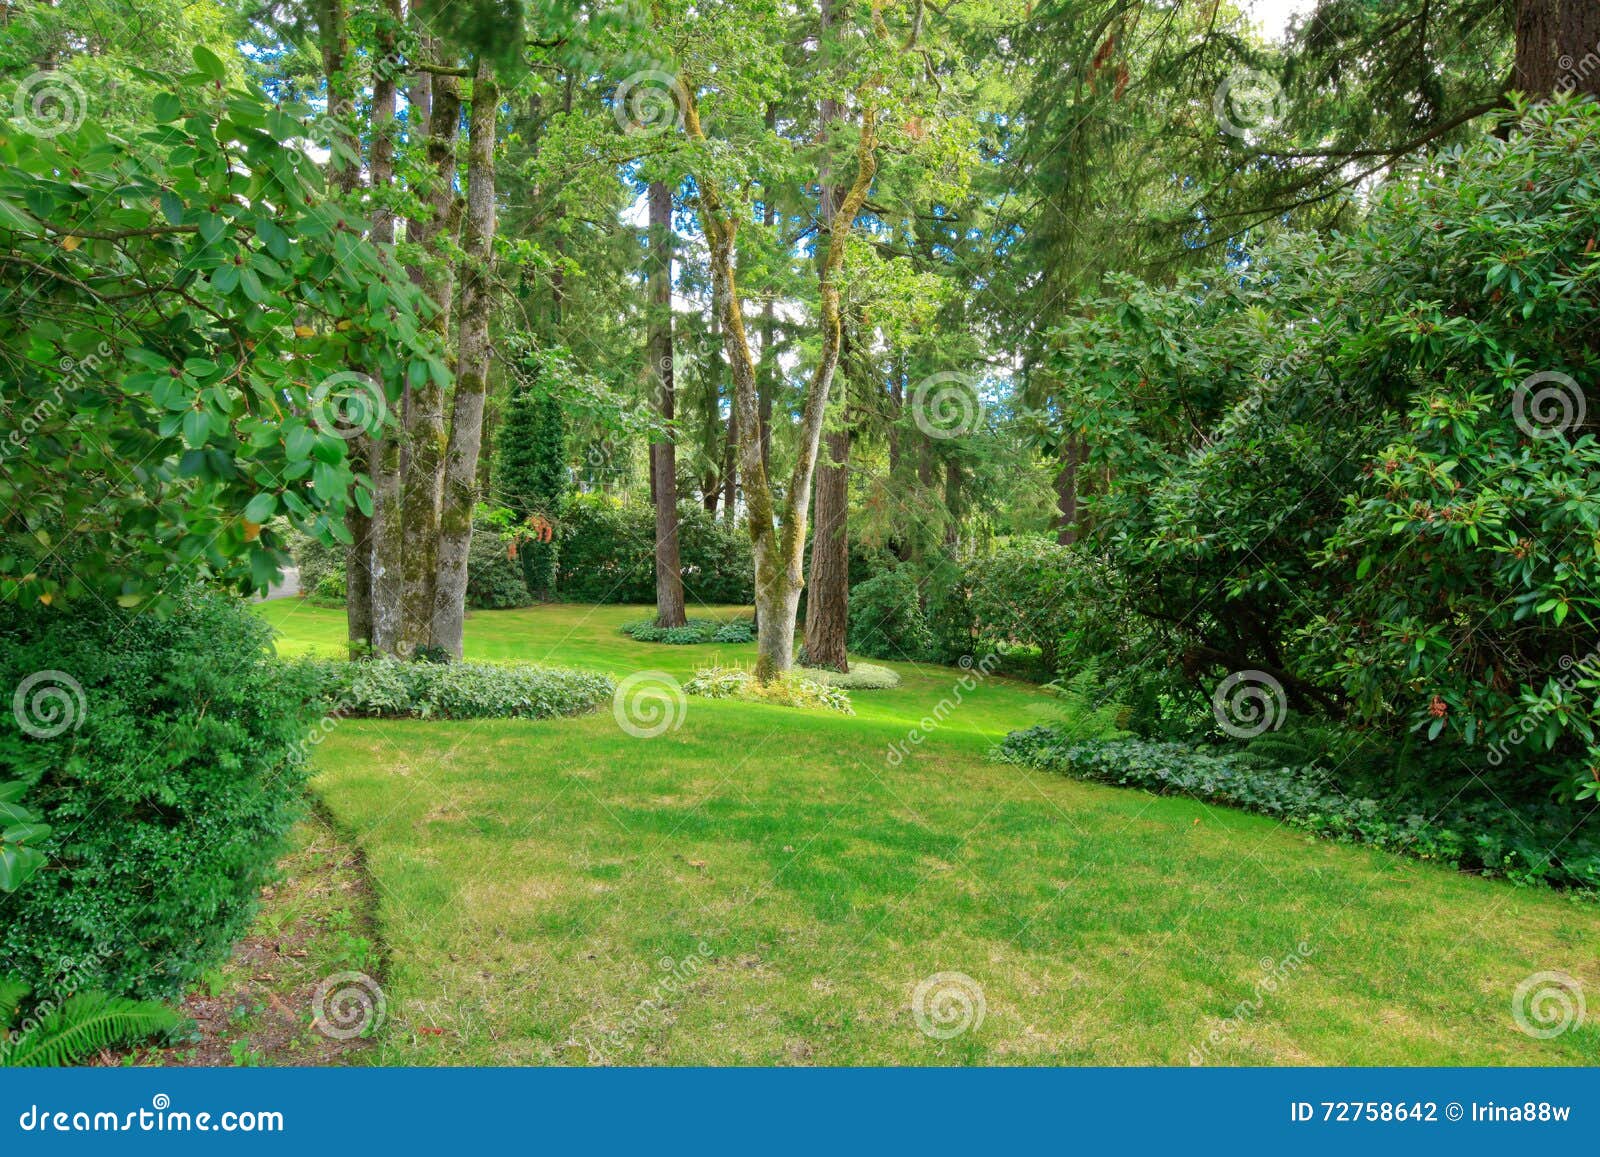 amazing farm house backyard with green lawn, fir trees, bushes